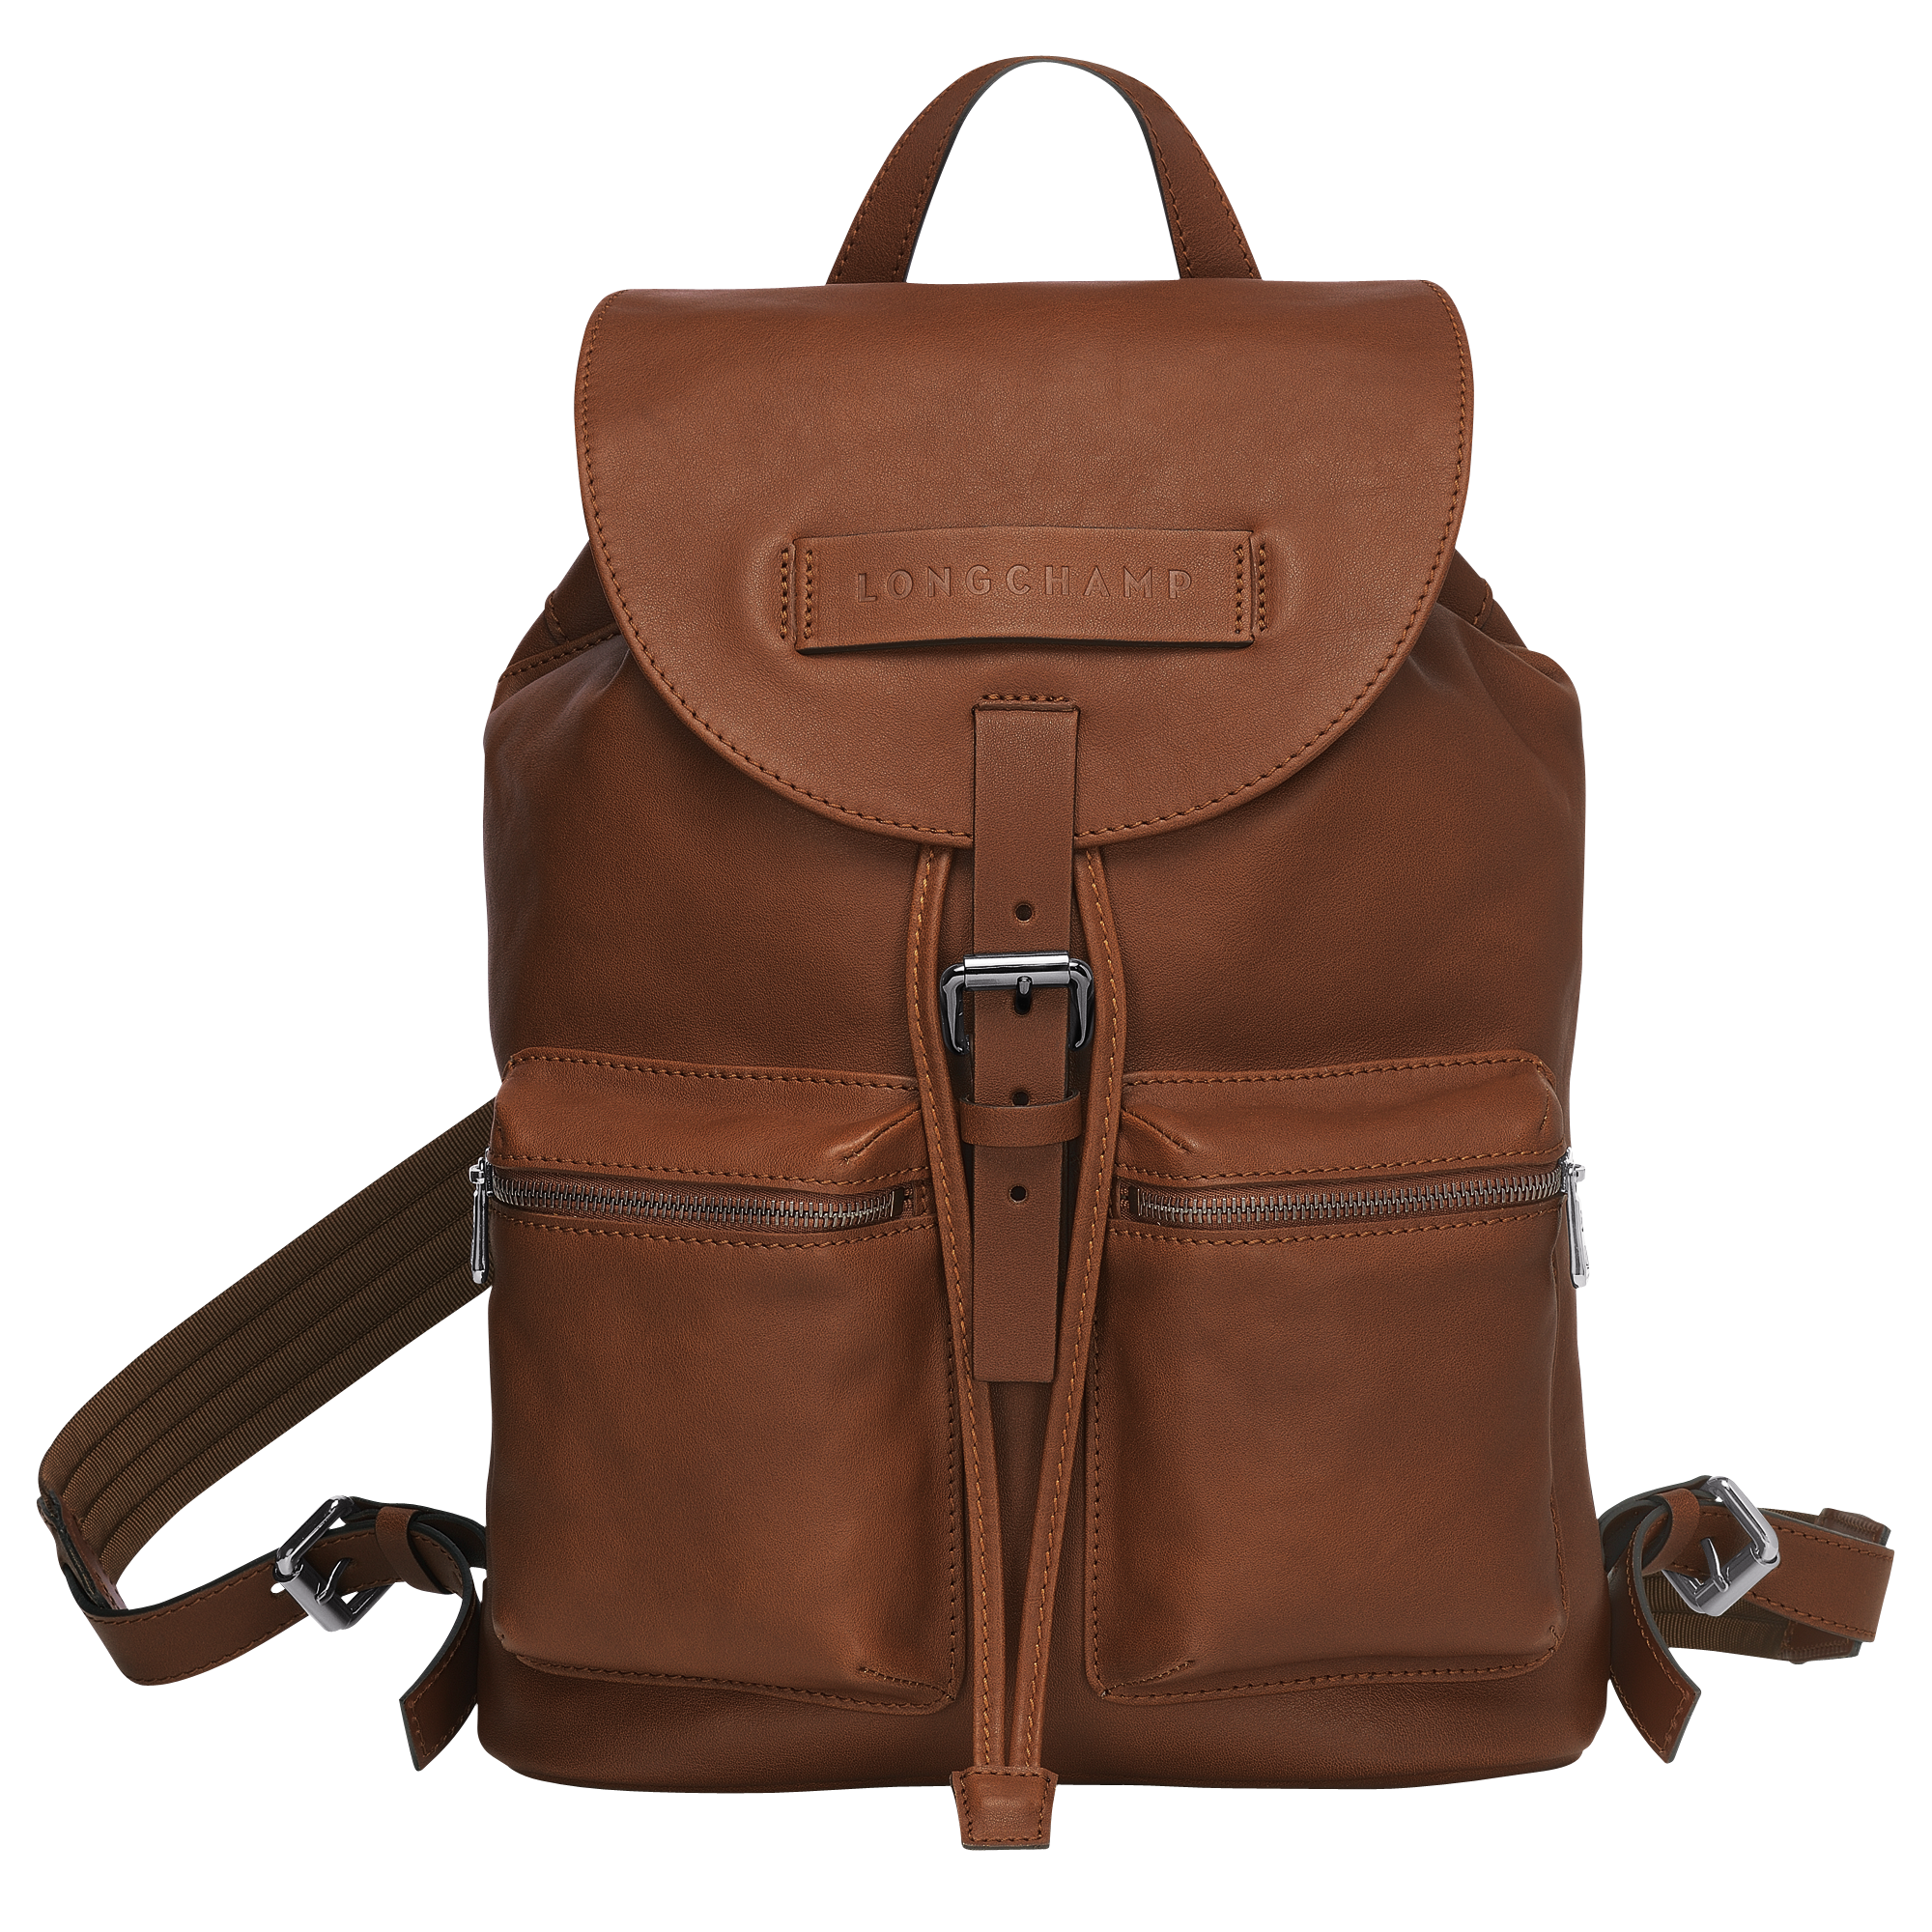 longchamp 3d backpack m